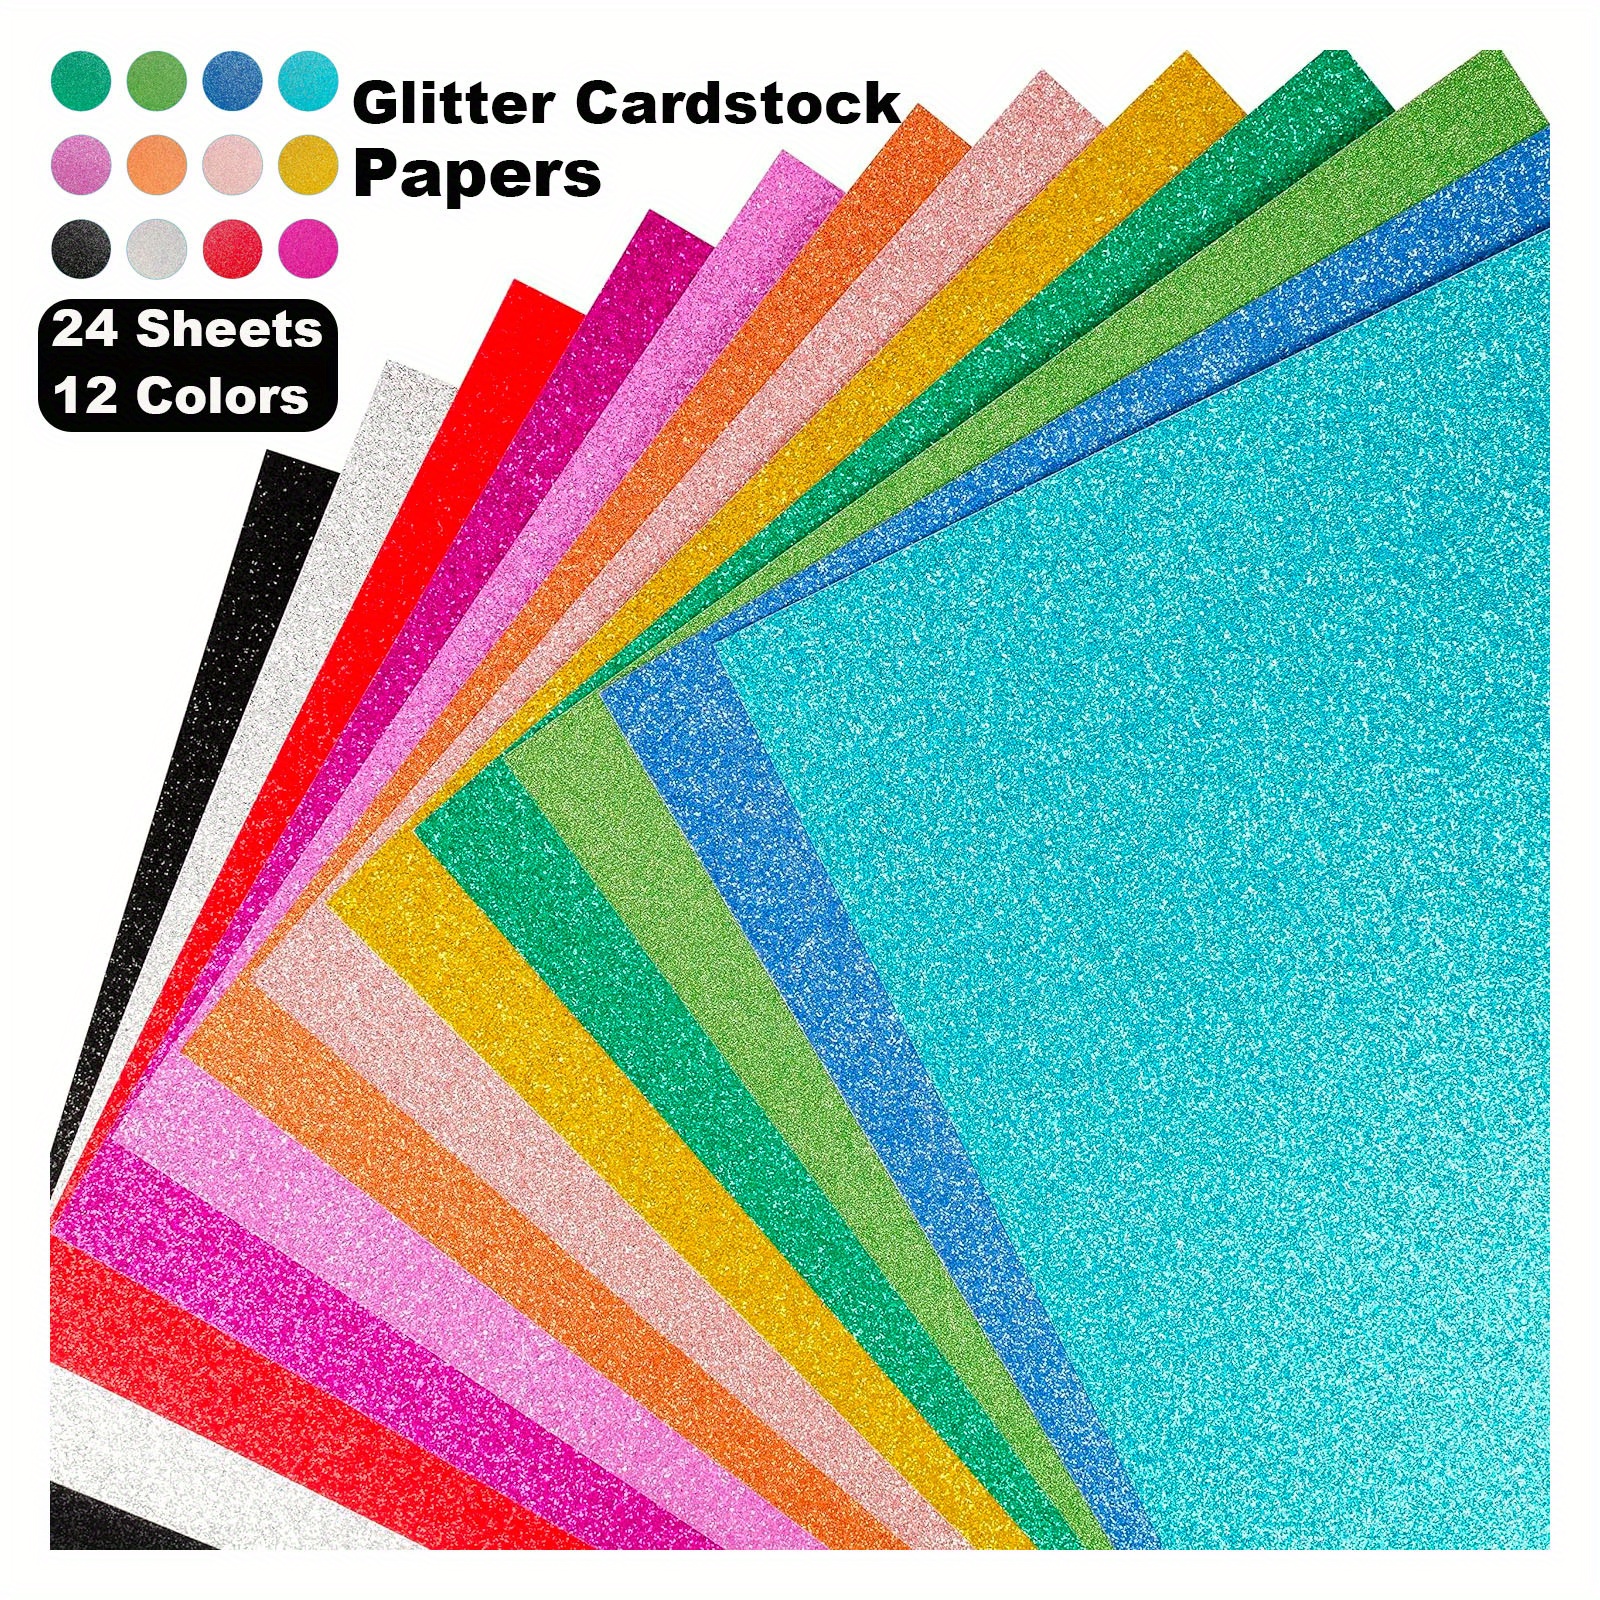 Glitter Cardstock Rose Gold For Cricut Making 300GSM 12*12 15 Sheets